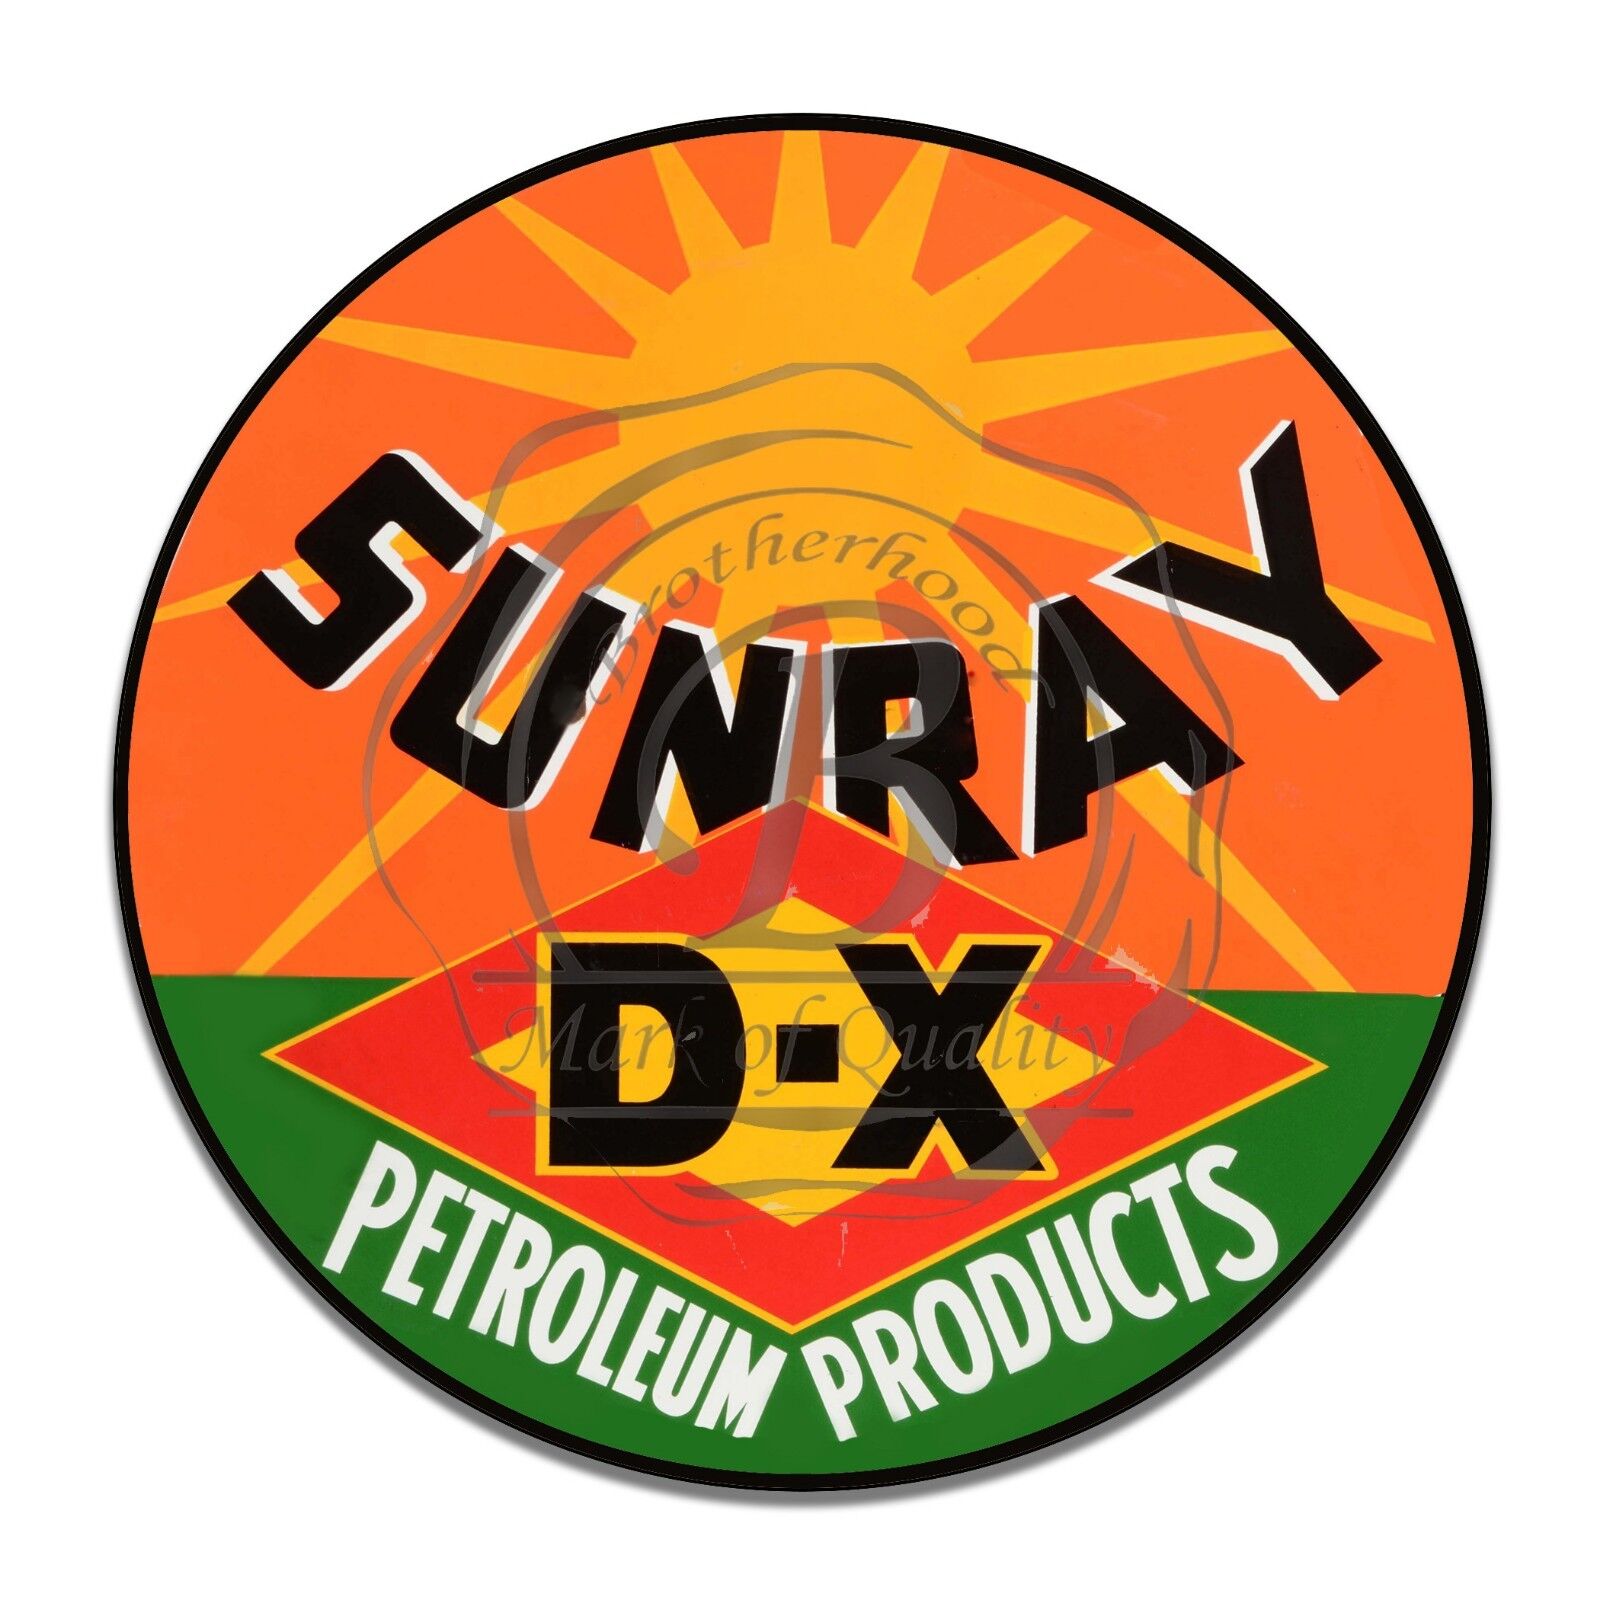 Sunray D-X Petroleum Products Reproduction Circle Aluminum Sign